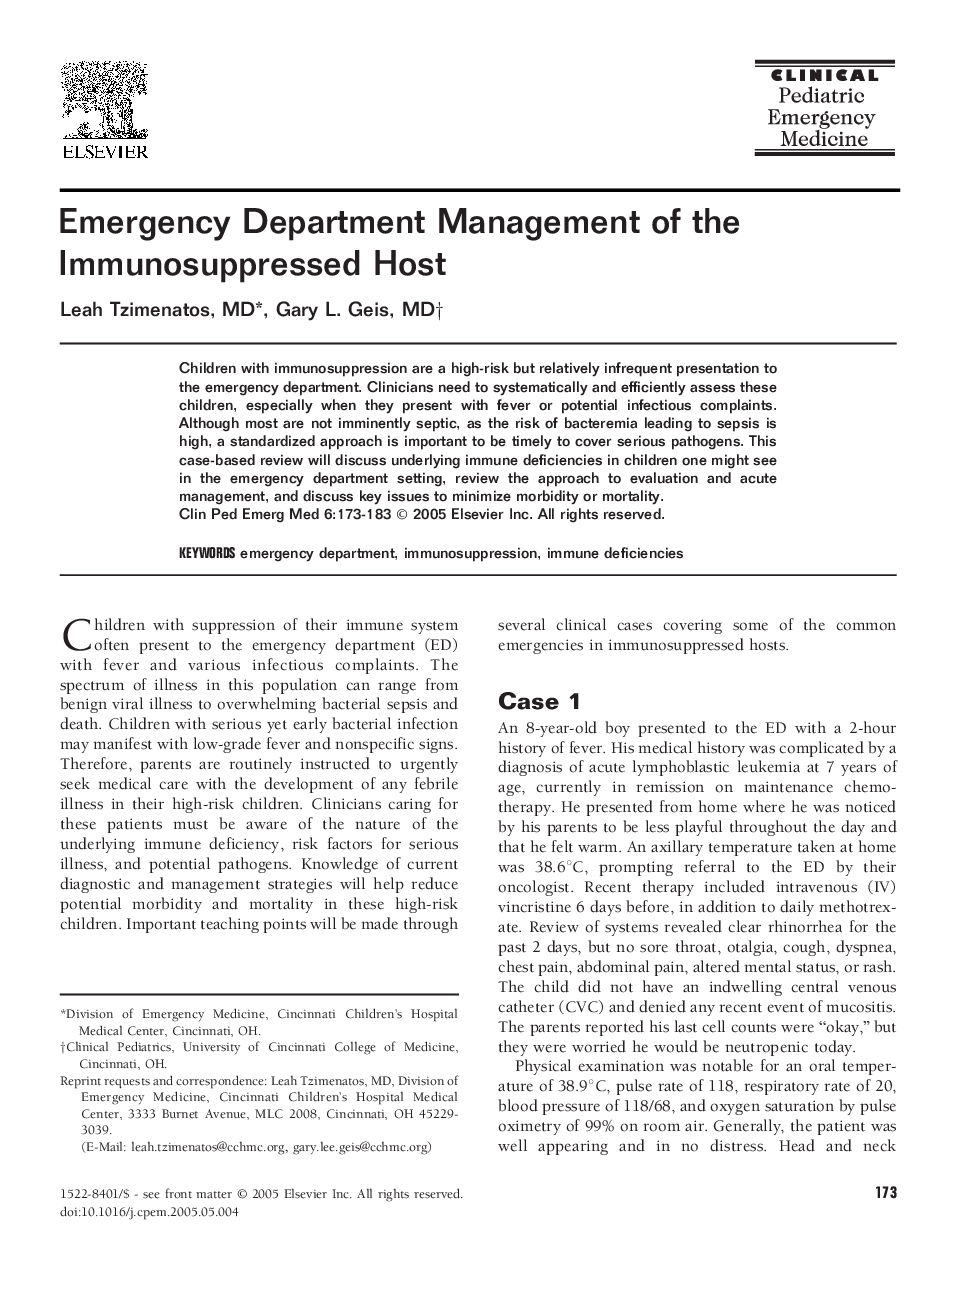 Emergency Department Management of the Immunosuppressed Host